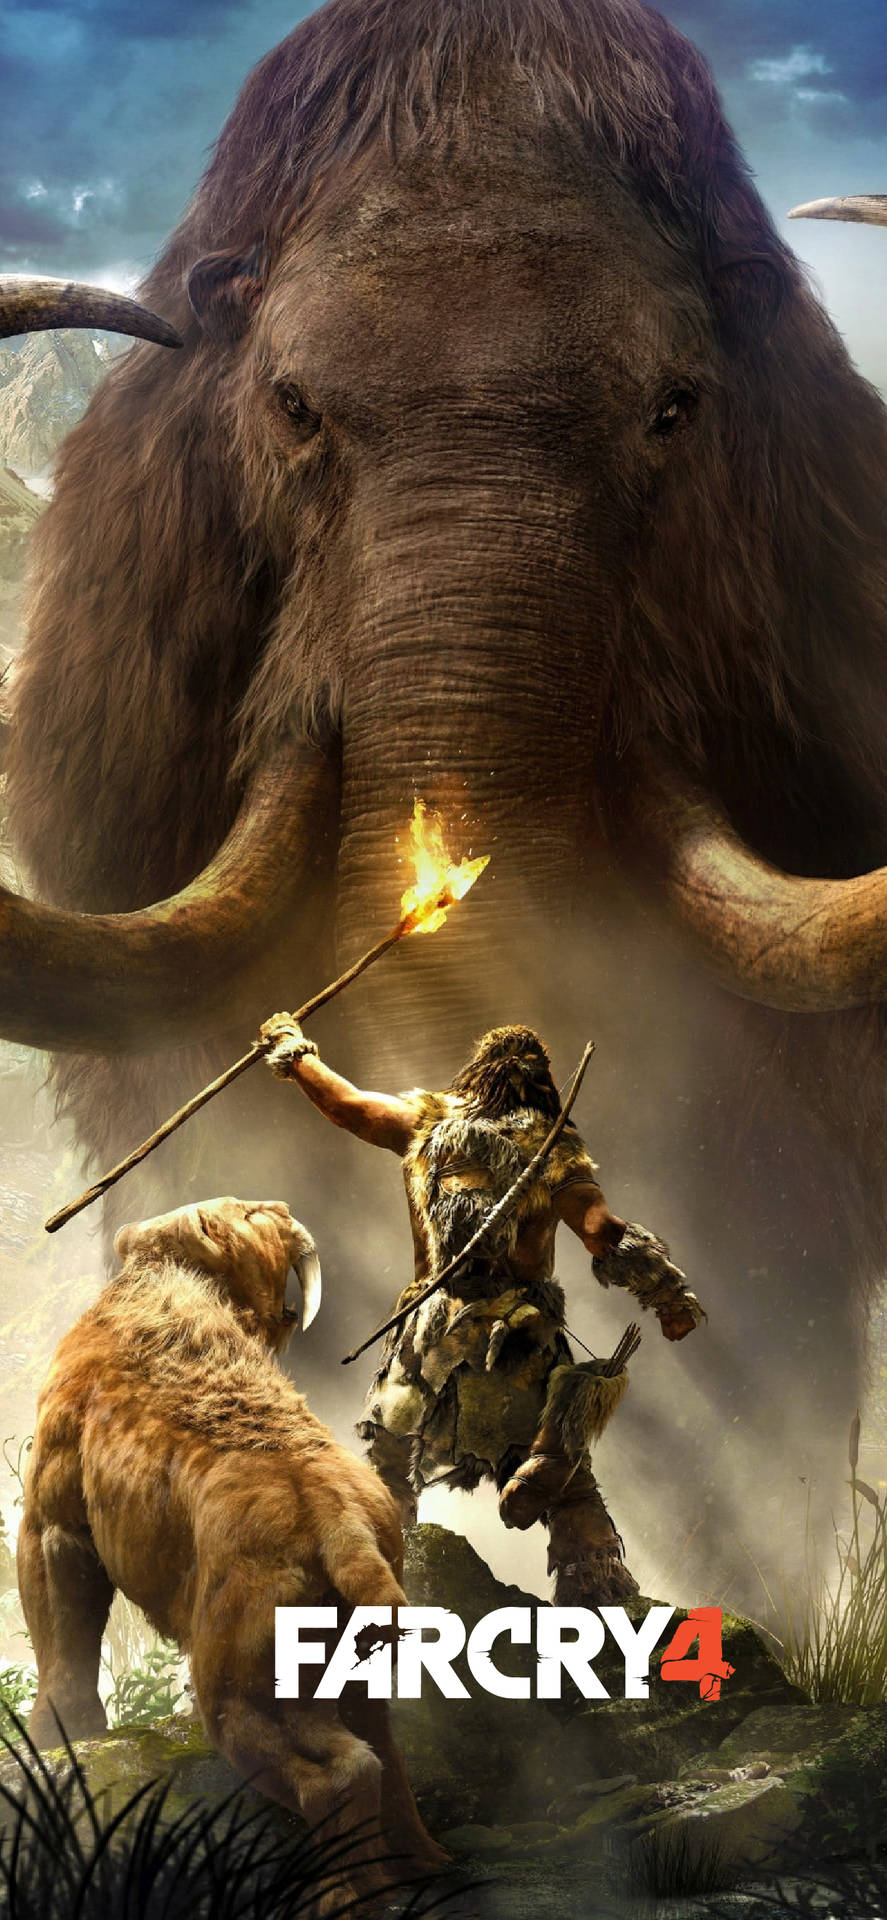 Ajay Facing Mammoth Far Cry Iphone Wallpaper